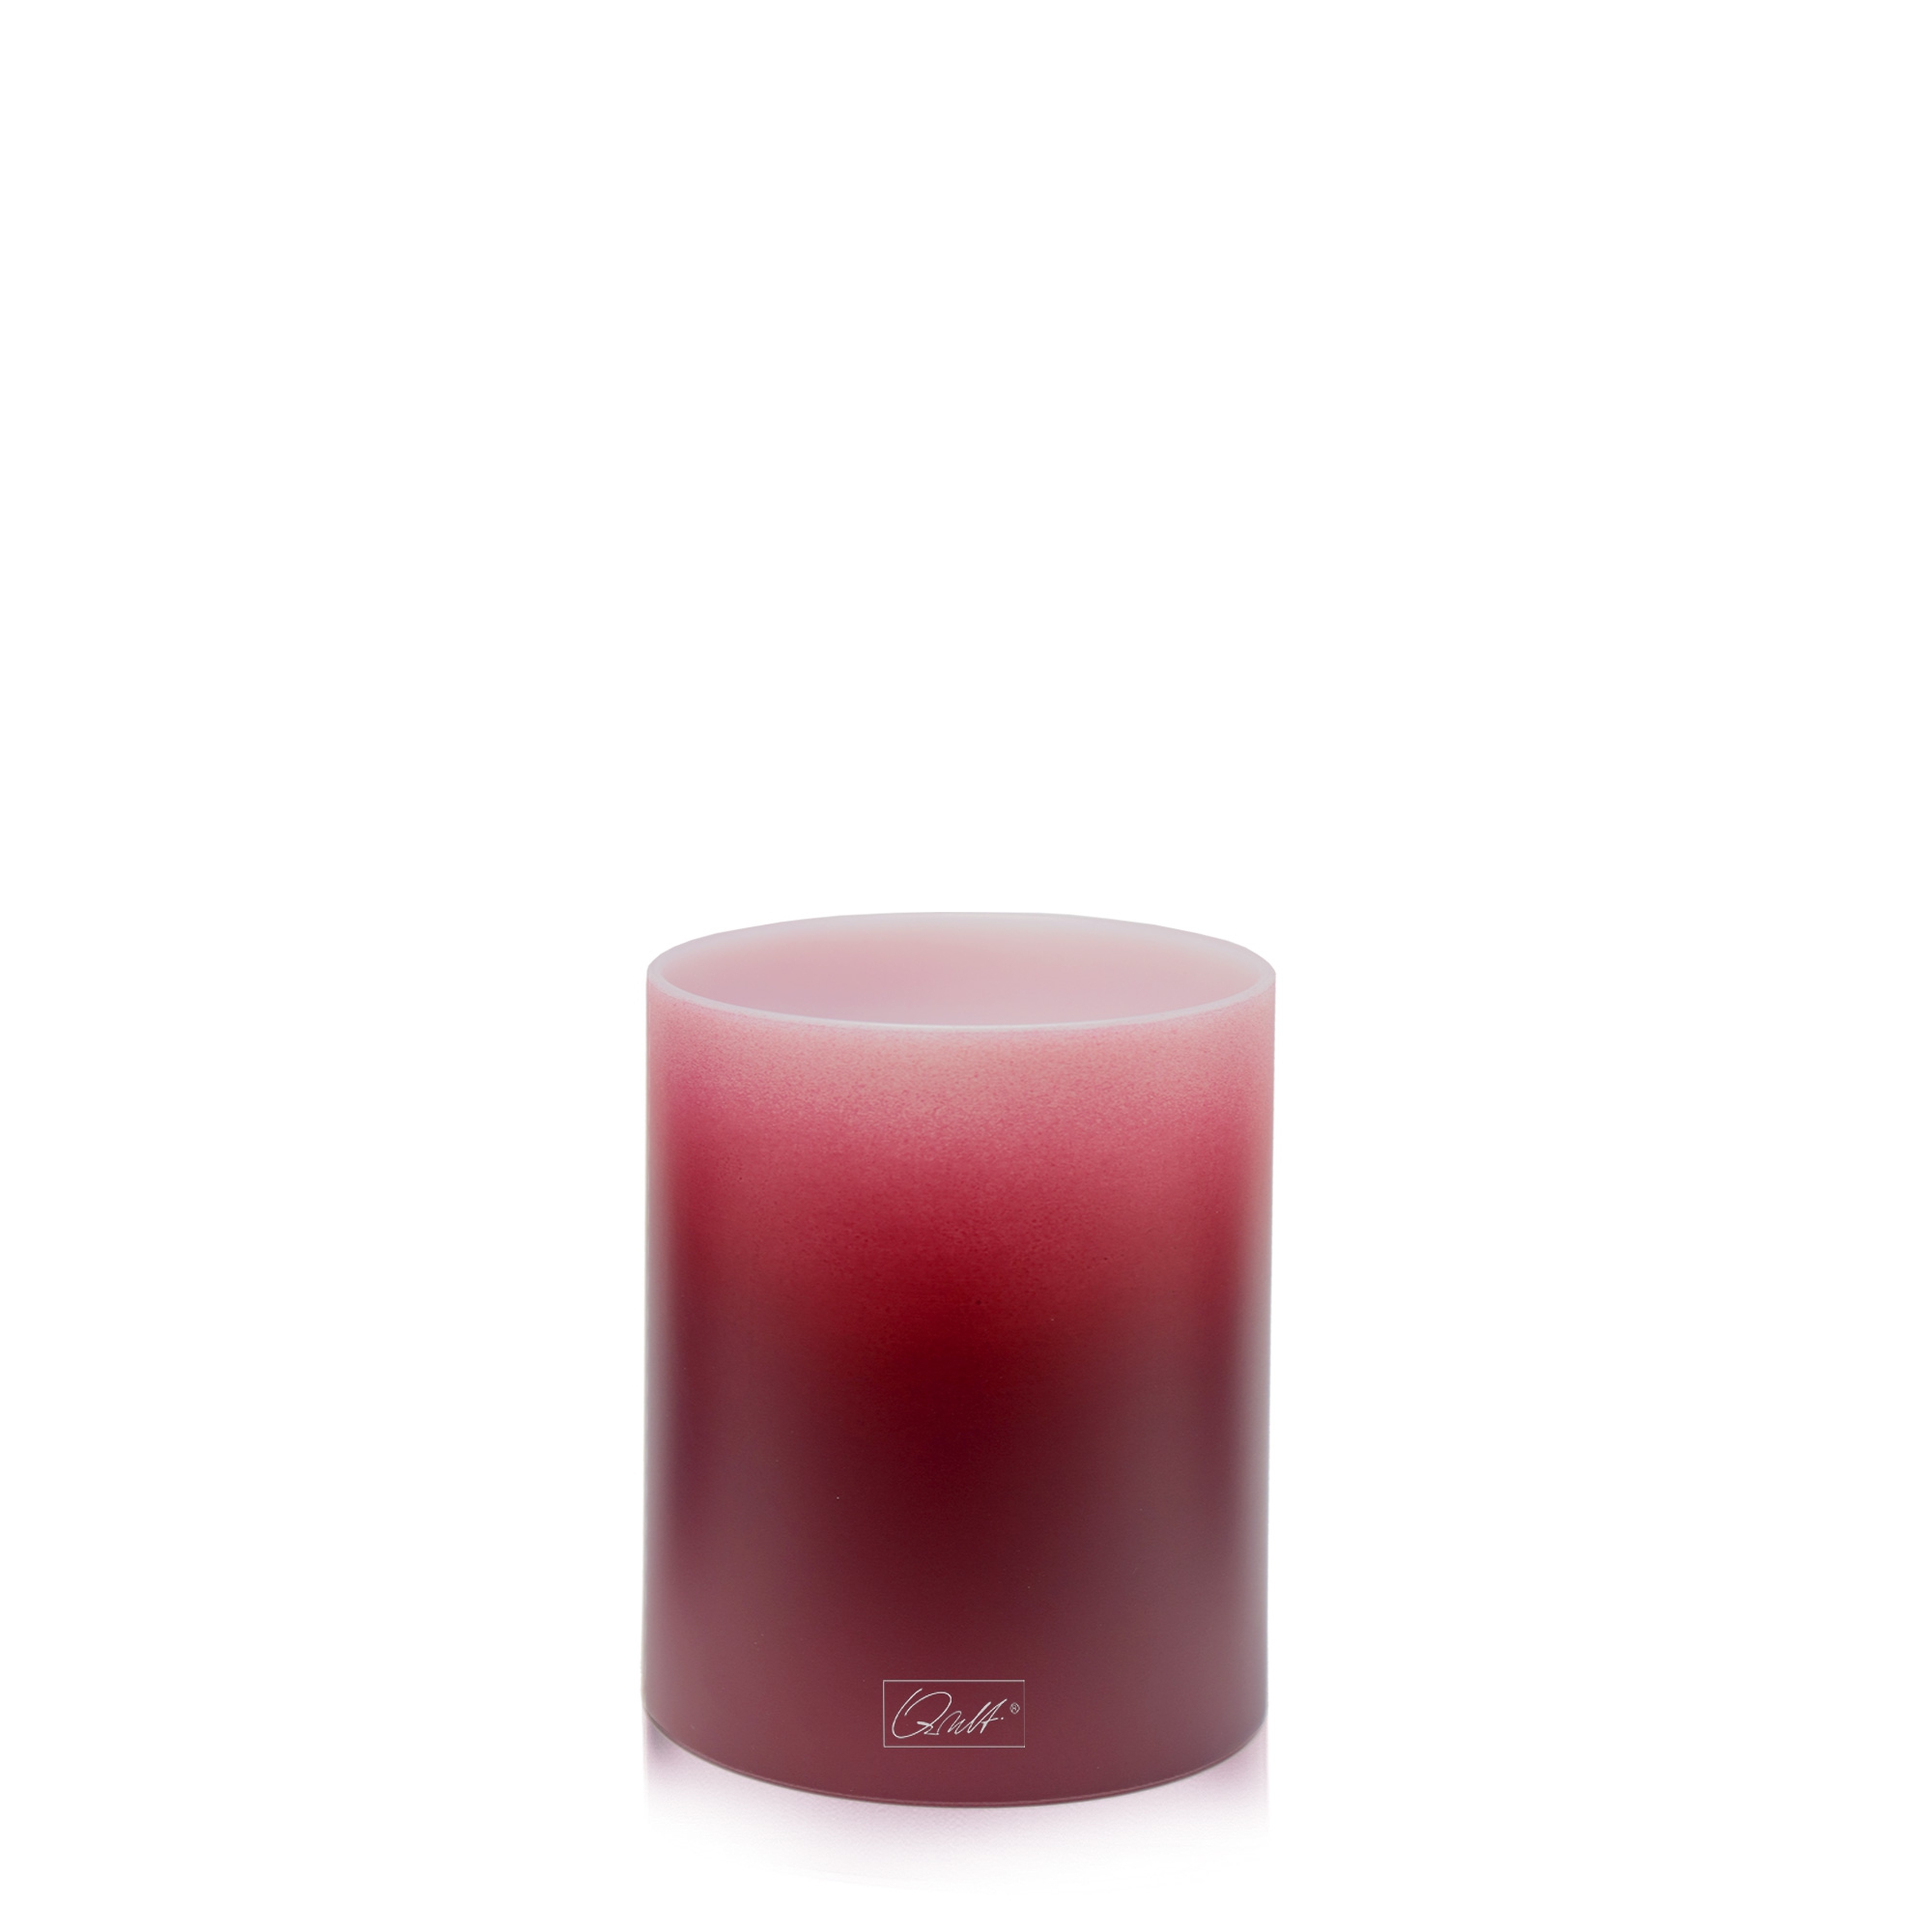 Qult Farluce Inside - Tealight Candle Holder Ø 8 x H 9 cm - Merlot Red